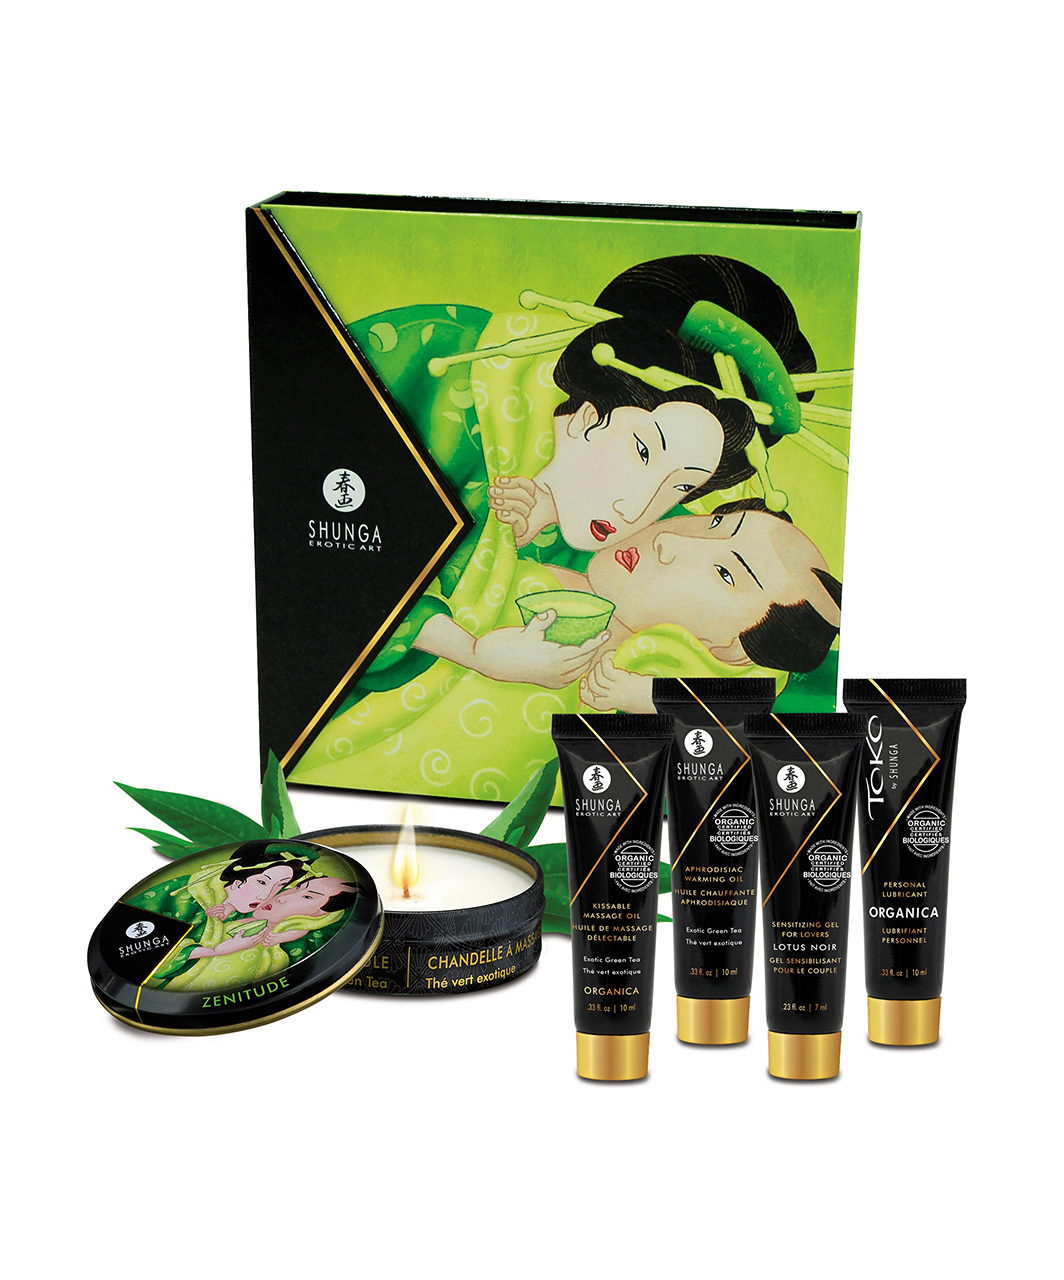 Shunga Geisha's Secret Organica набор интимной косметики